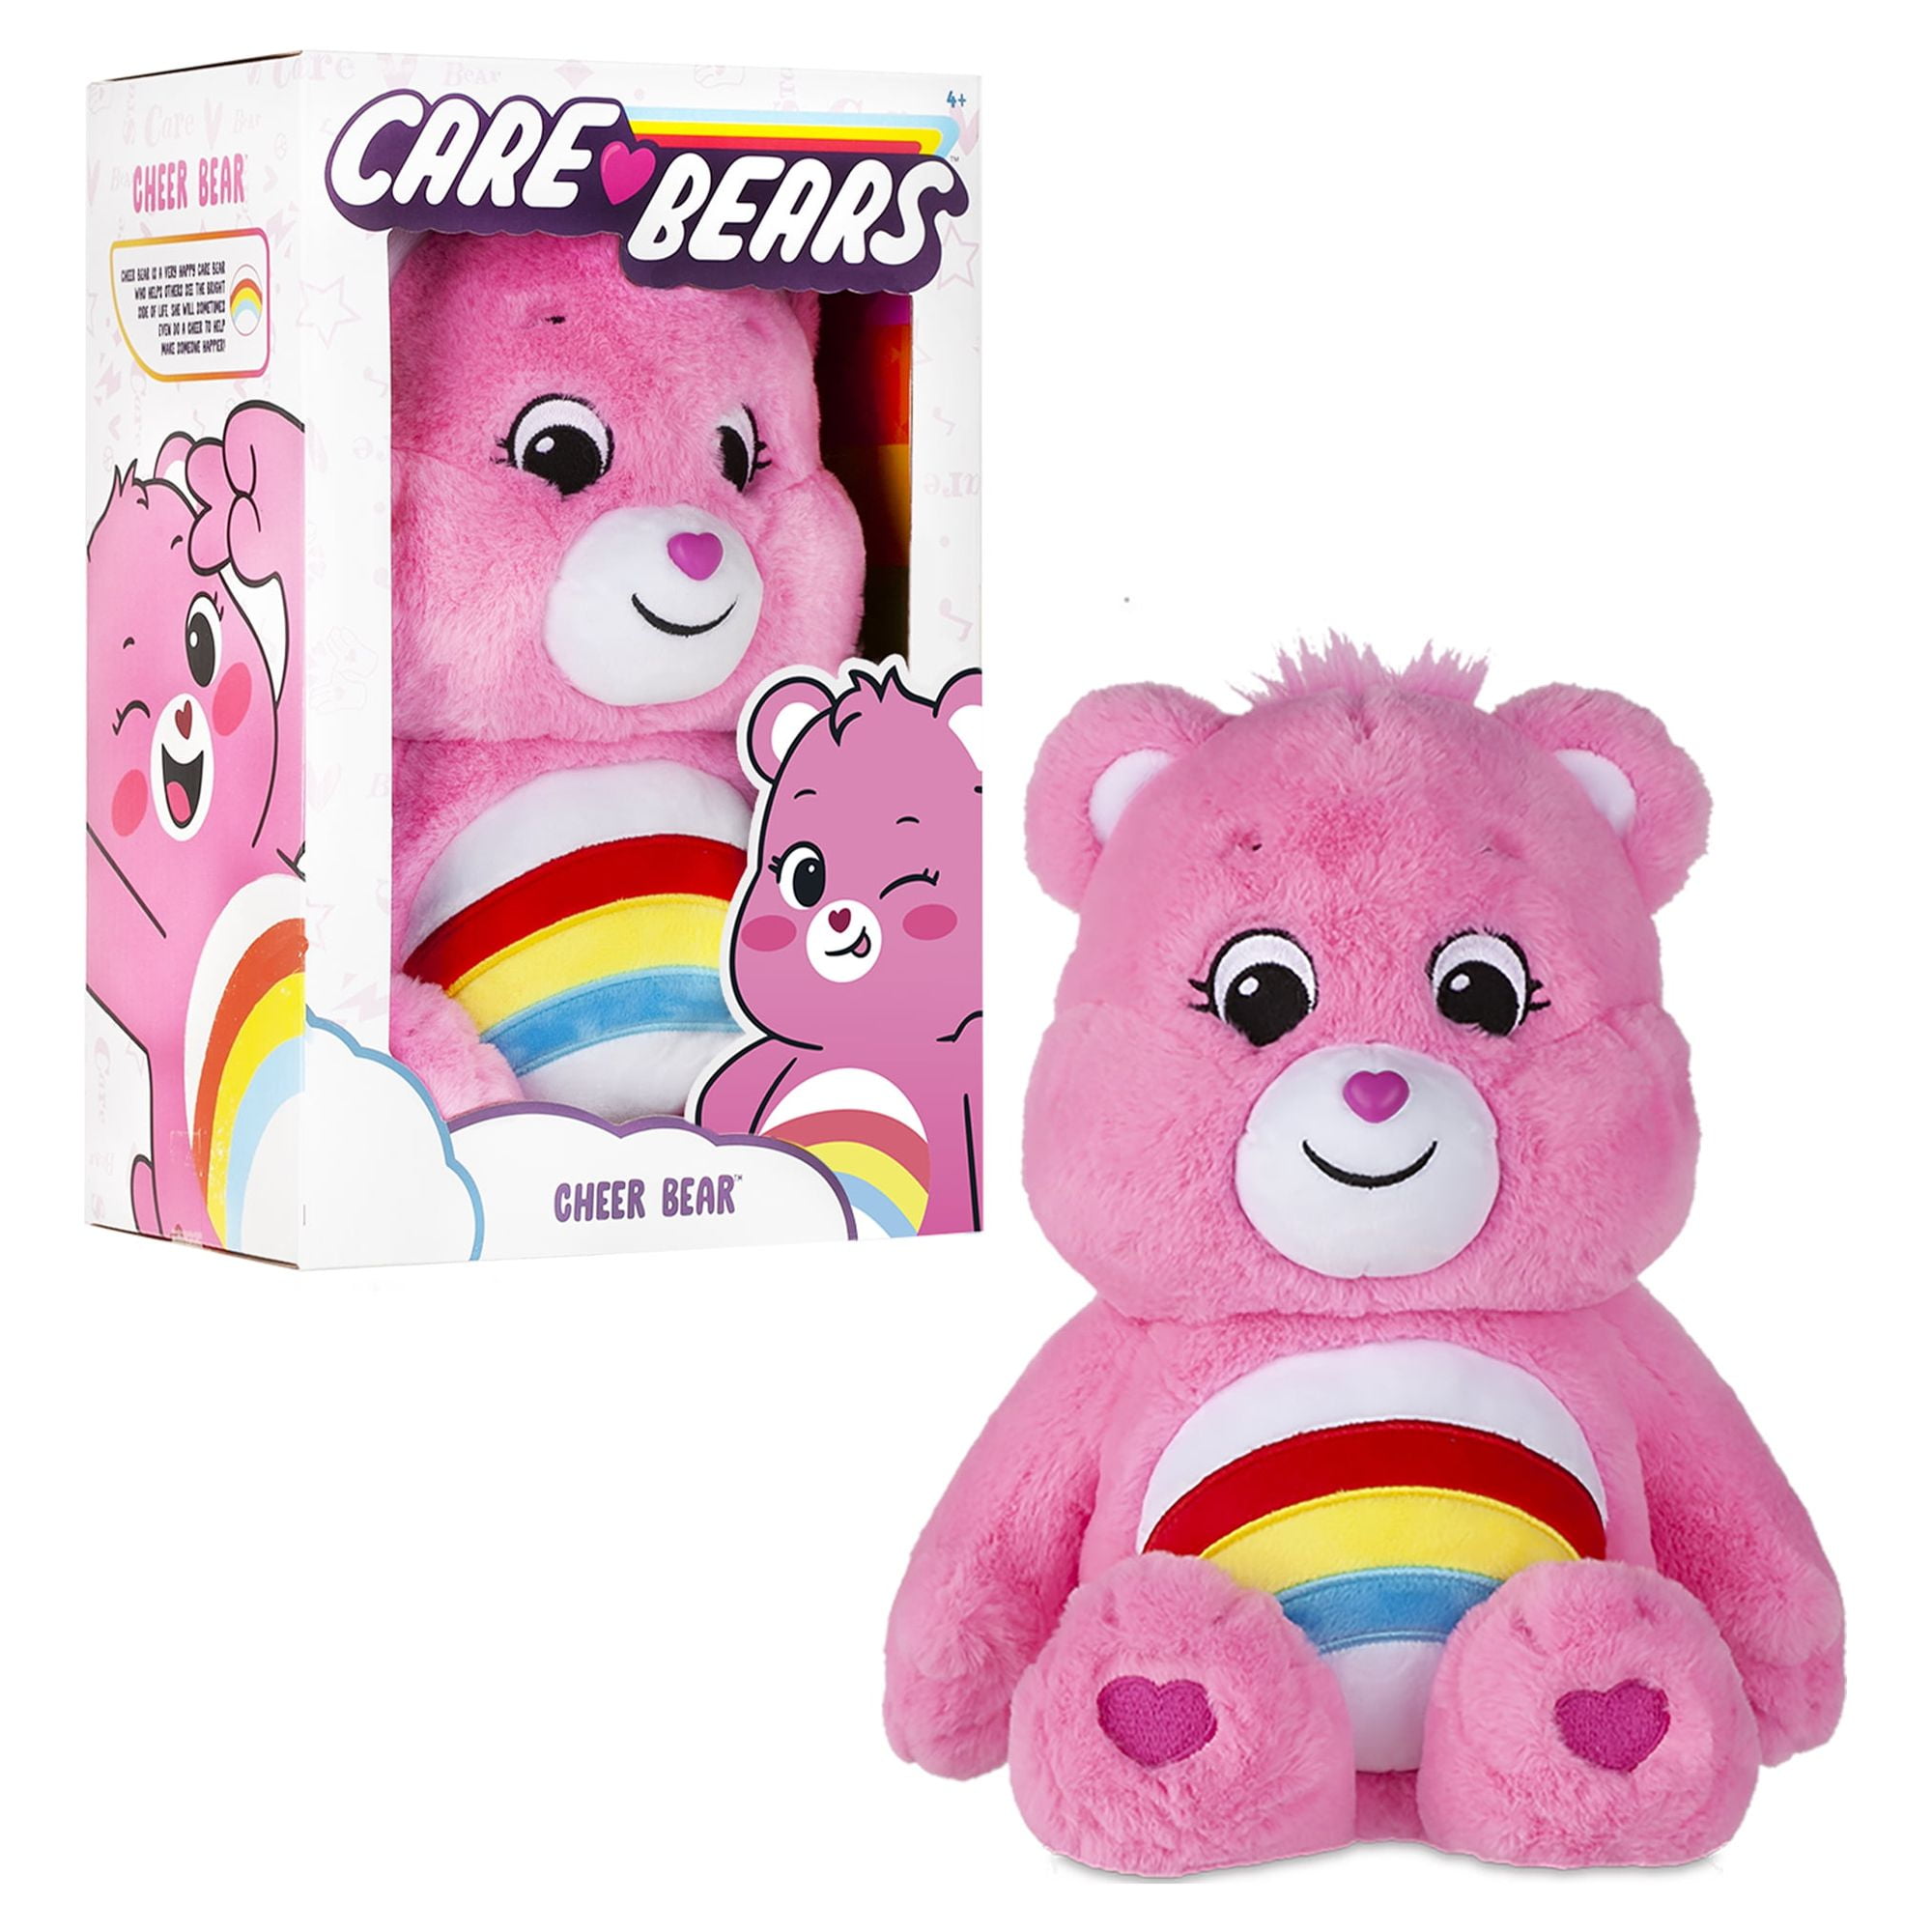 Care Bears 14 Plush - Cheer Bear - Soft Huggable Material!